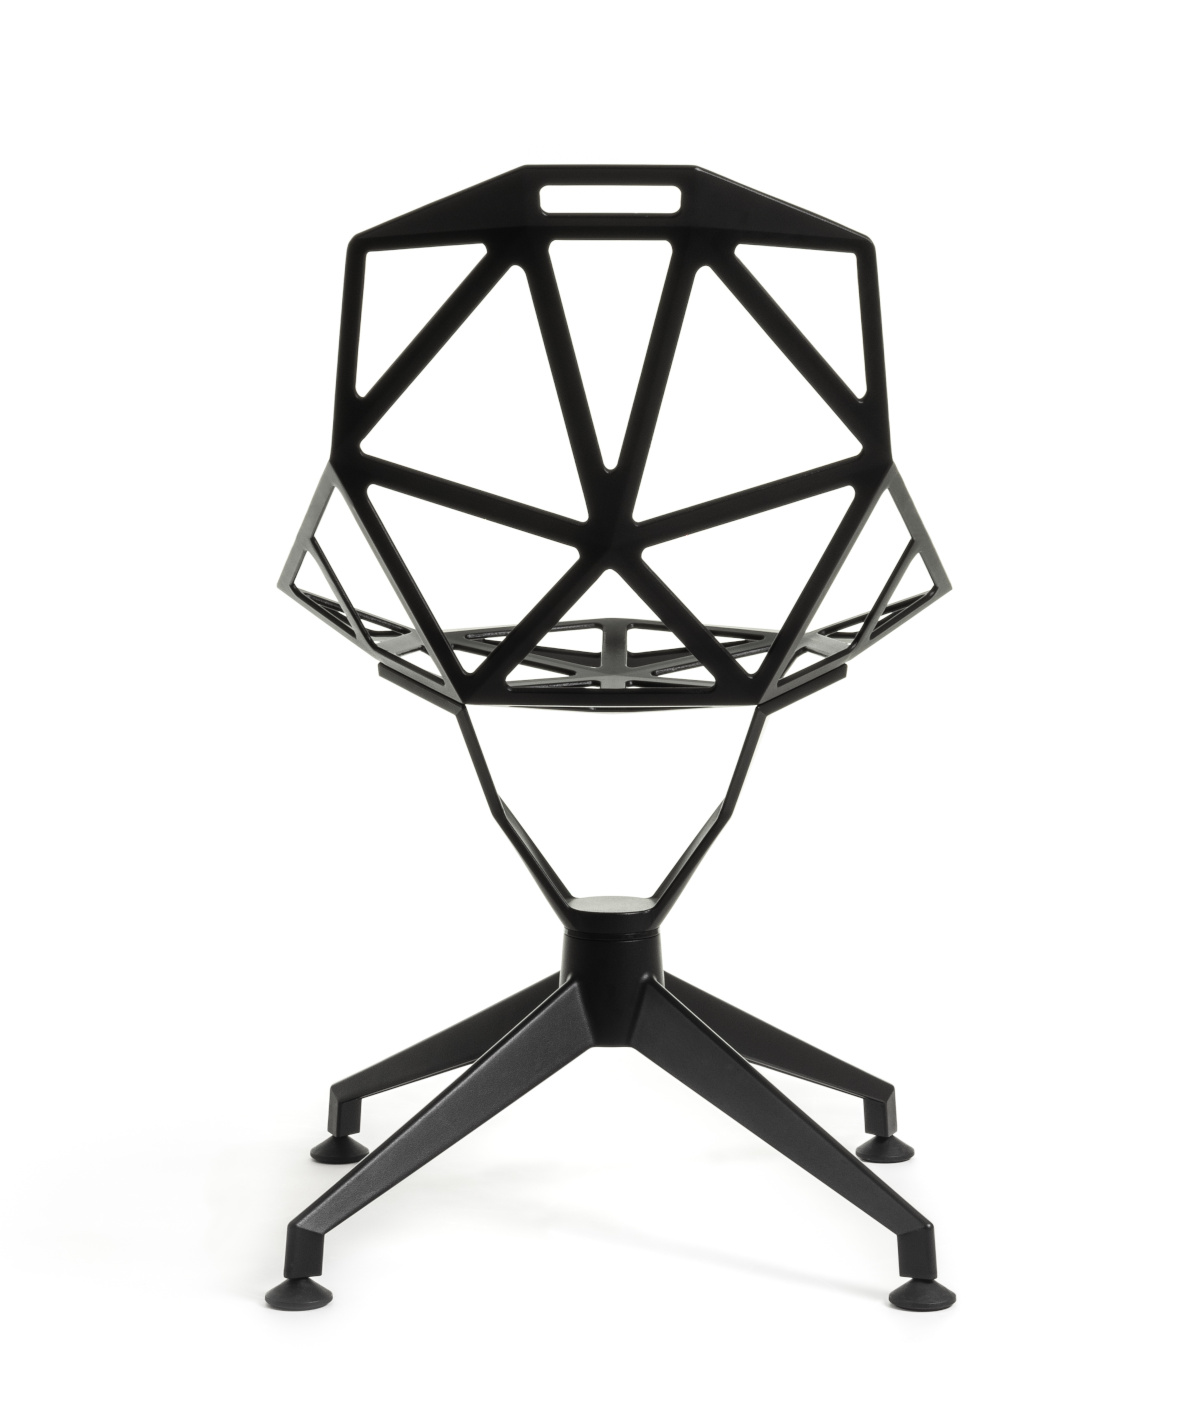 Chair One 4Star, drehbar, graugrün